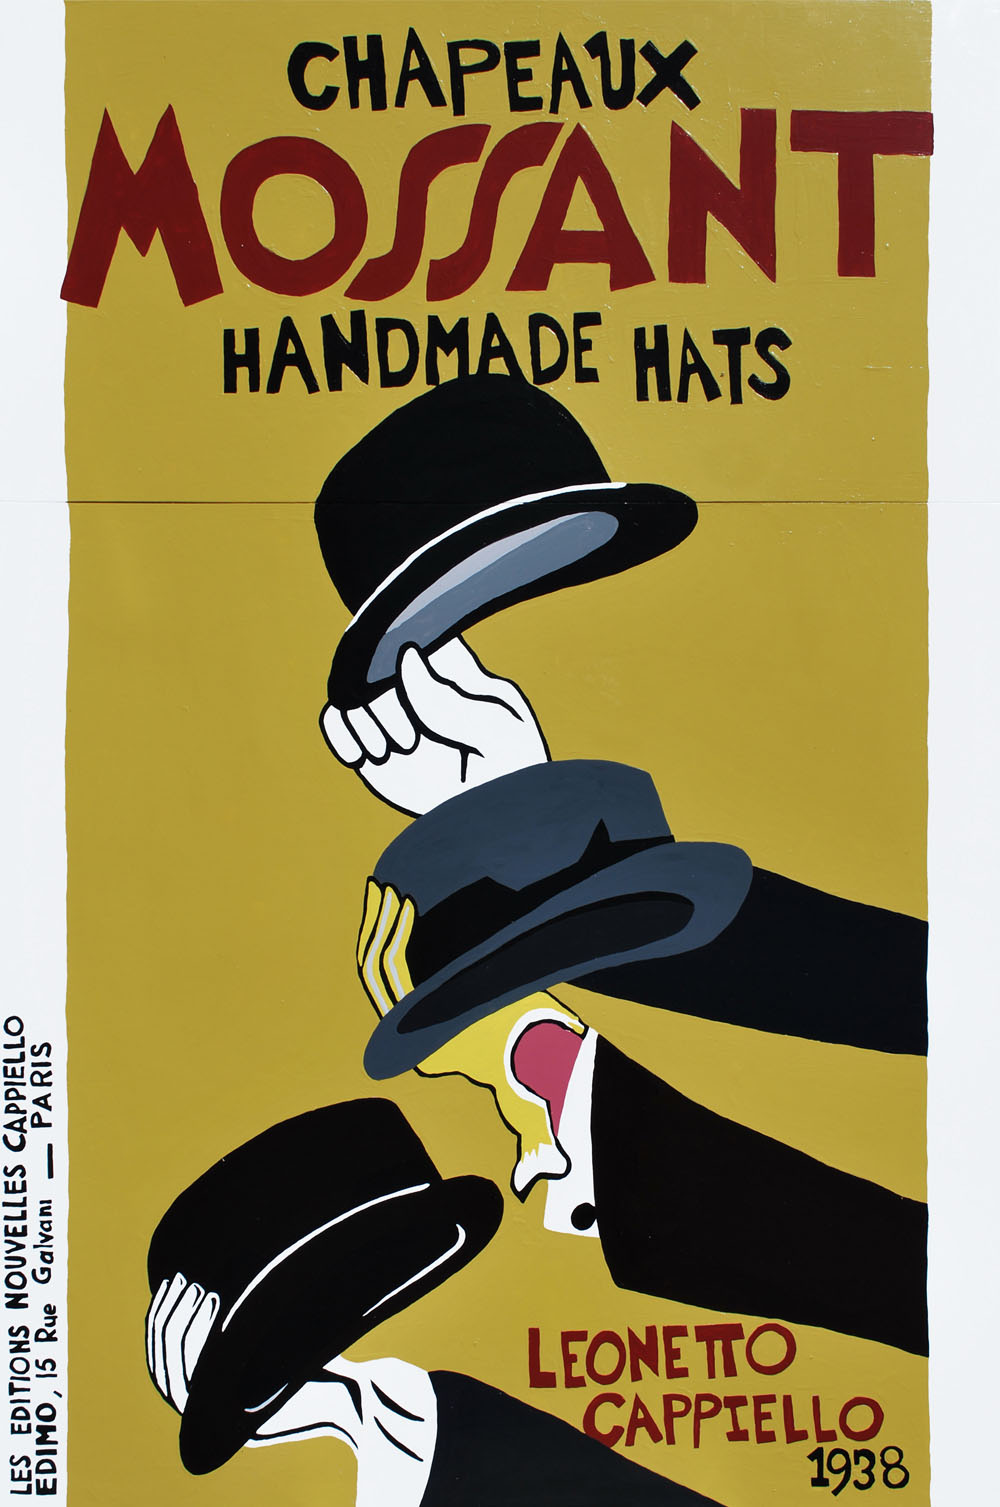 Hats — ART OF SPANJER